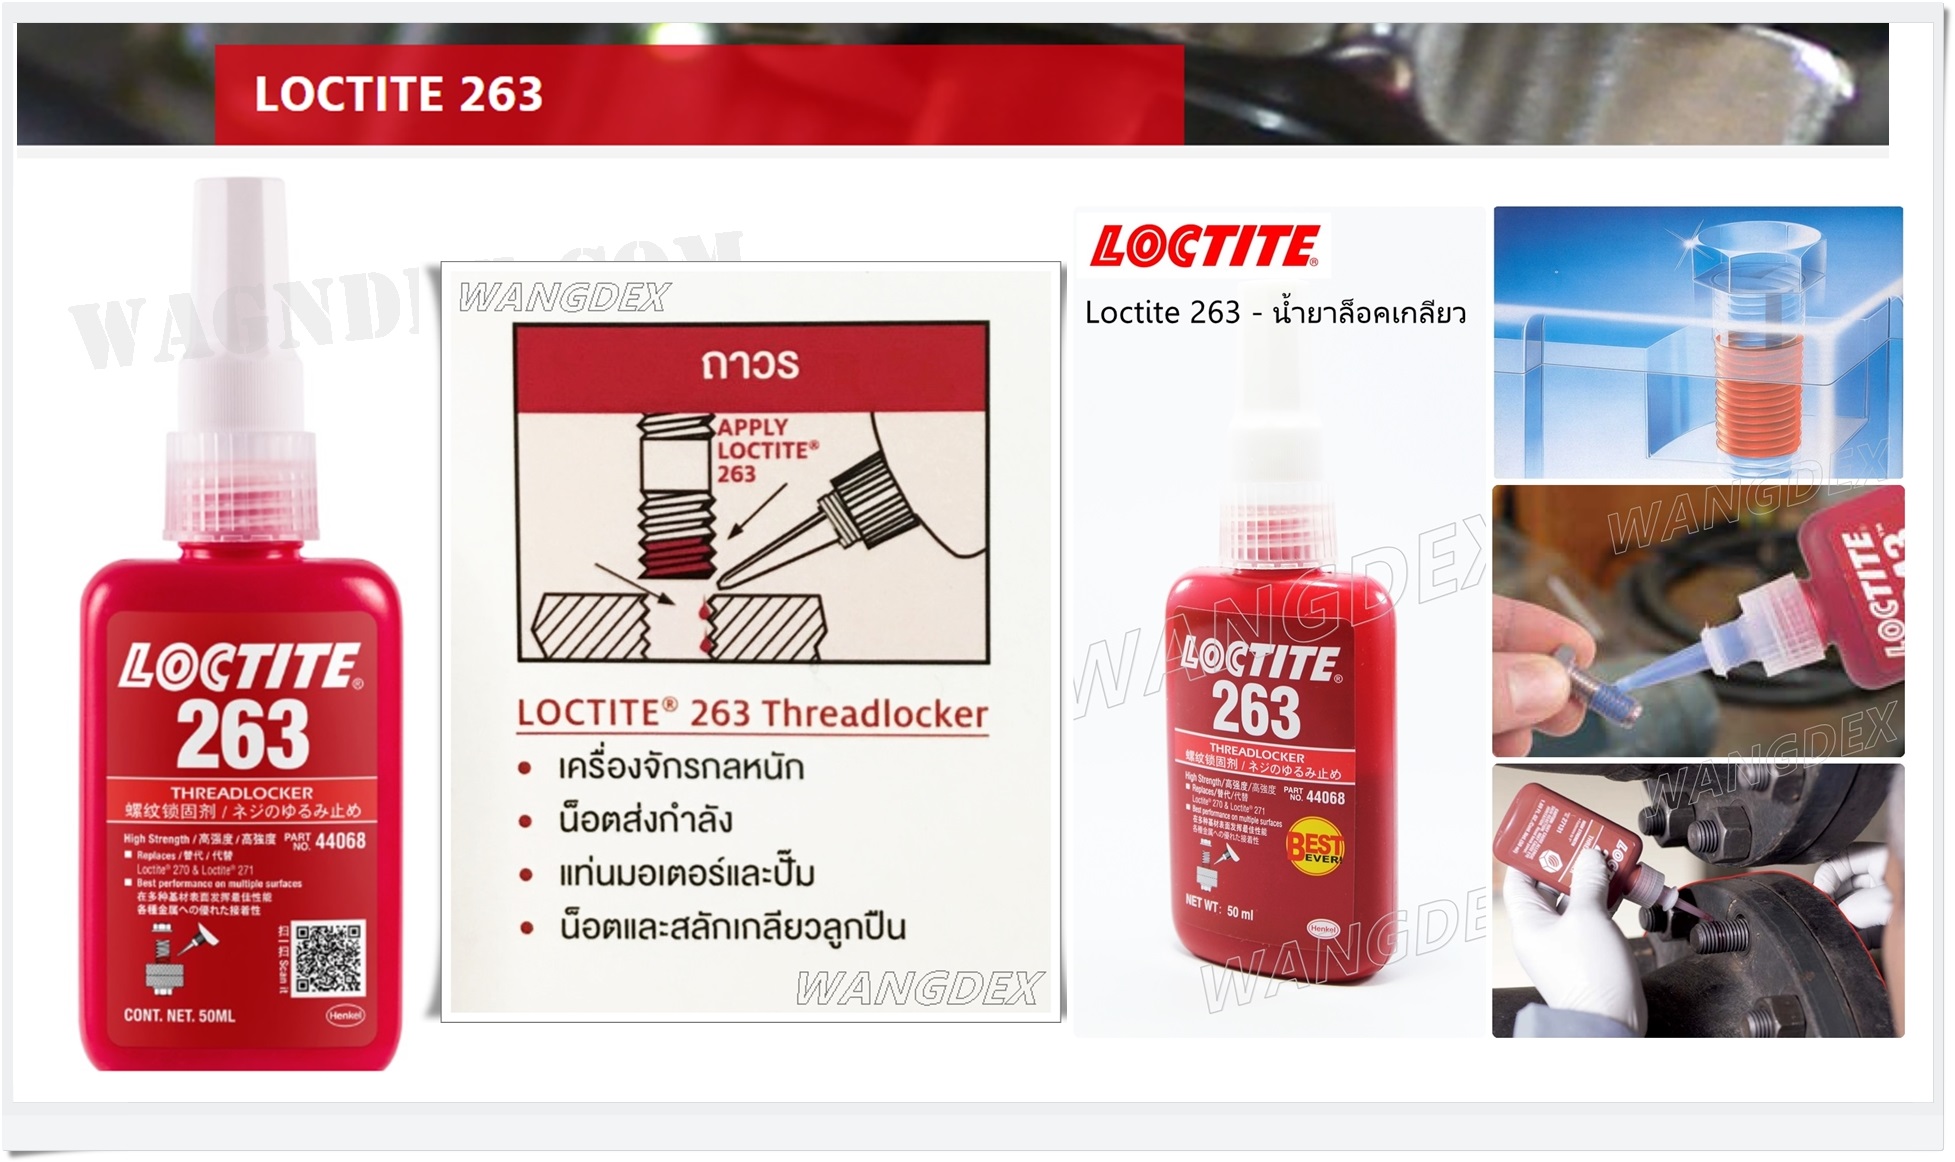 Loctite 263 (น้ำยาล็อคเกลี่ยว) Thread locking